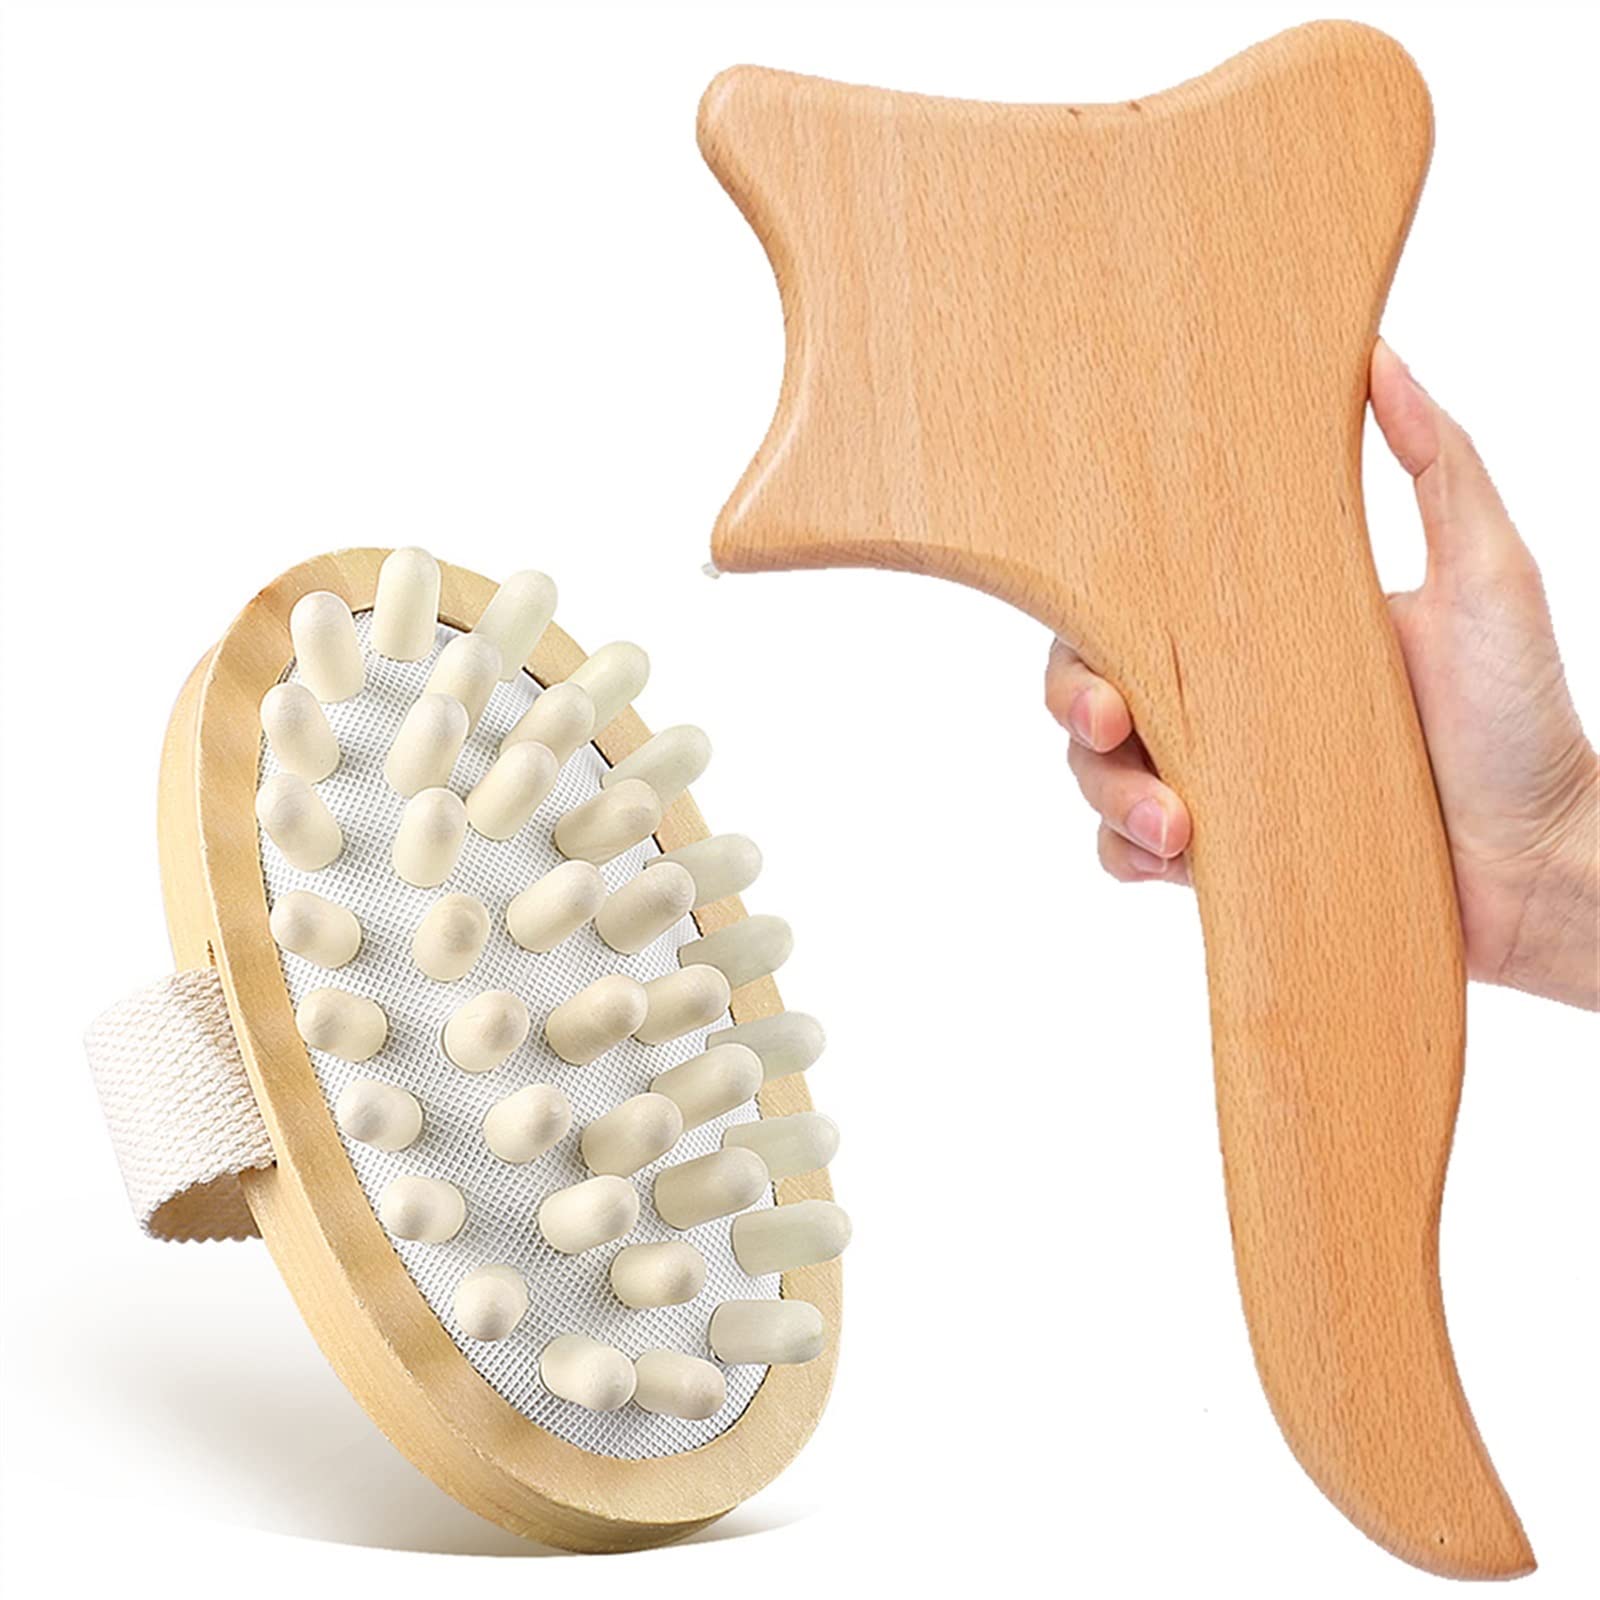 2 teile/satz Holz Therapie Trockenbürste Massage Werkzeuge Kit-Holz Lymphdrainage Werkzeug Home Trockenbürsten Körperbürste Lymphpaddel